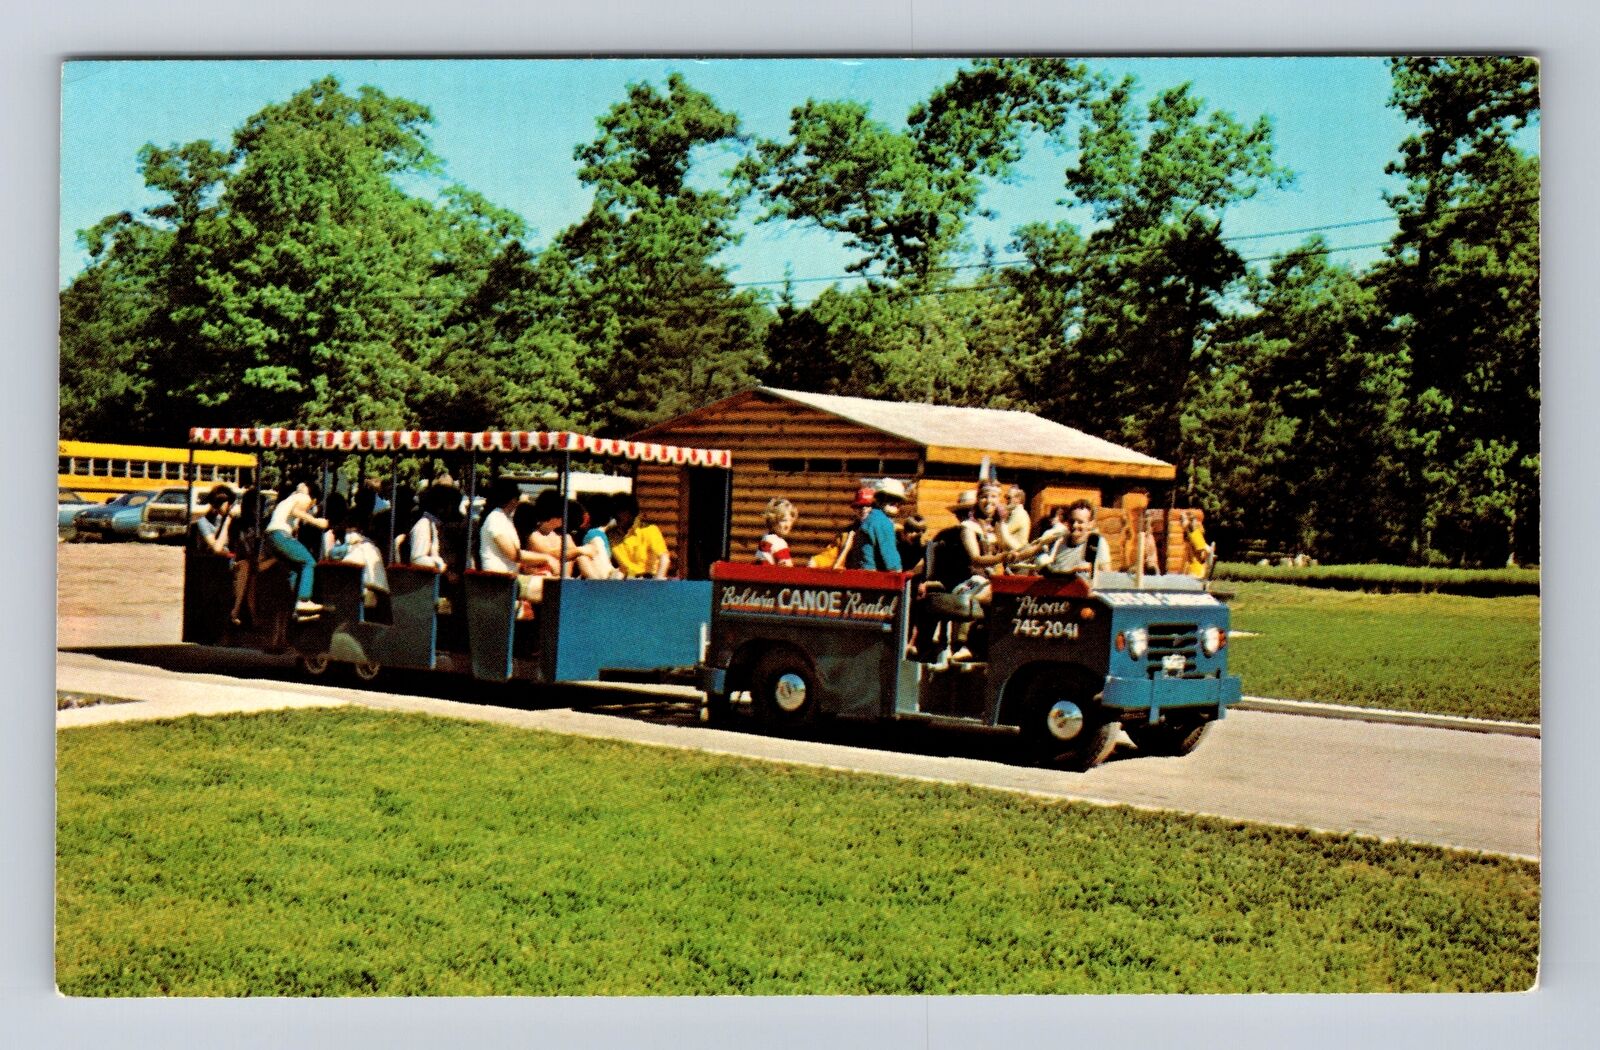 Baldwin MI-Michigan, Canoe Rentals Trolly, Advertising Vintage c1970 Postcard